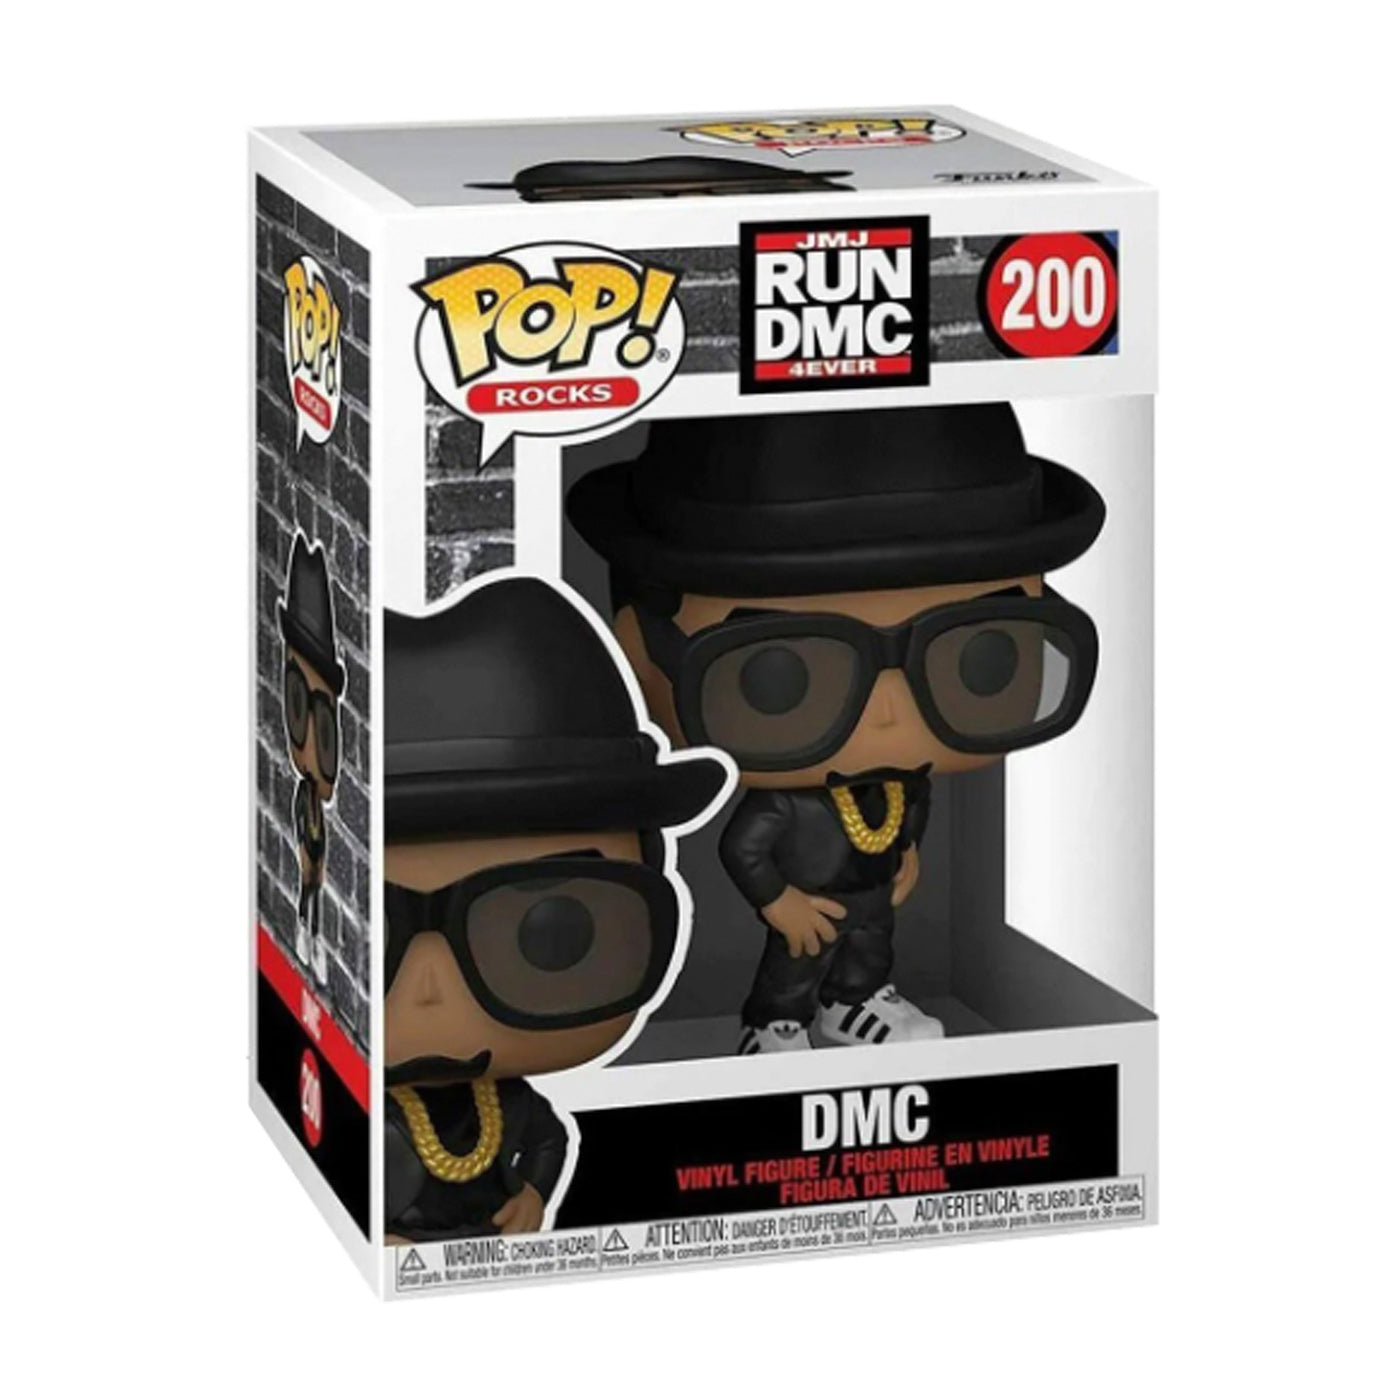 Funko Pop Rocks: DMC (200)